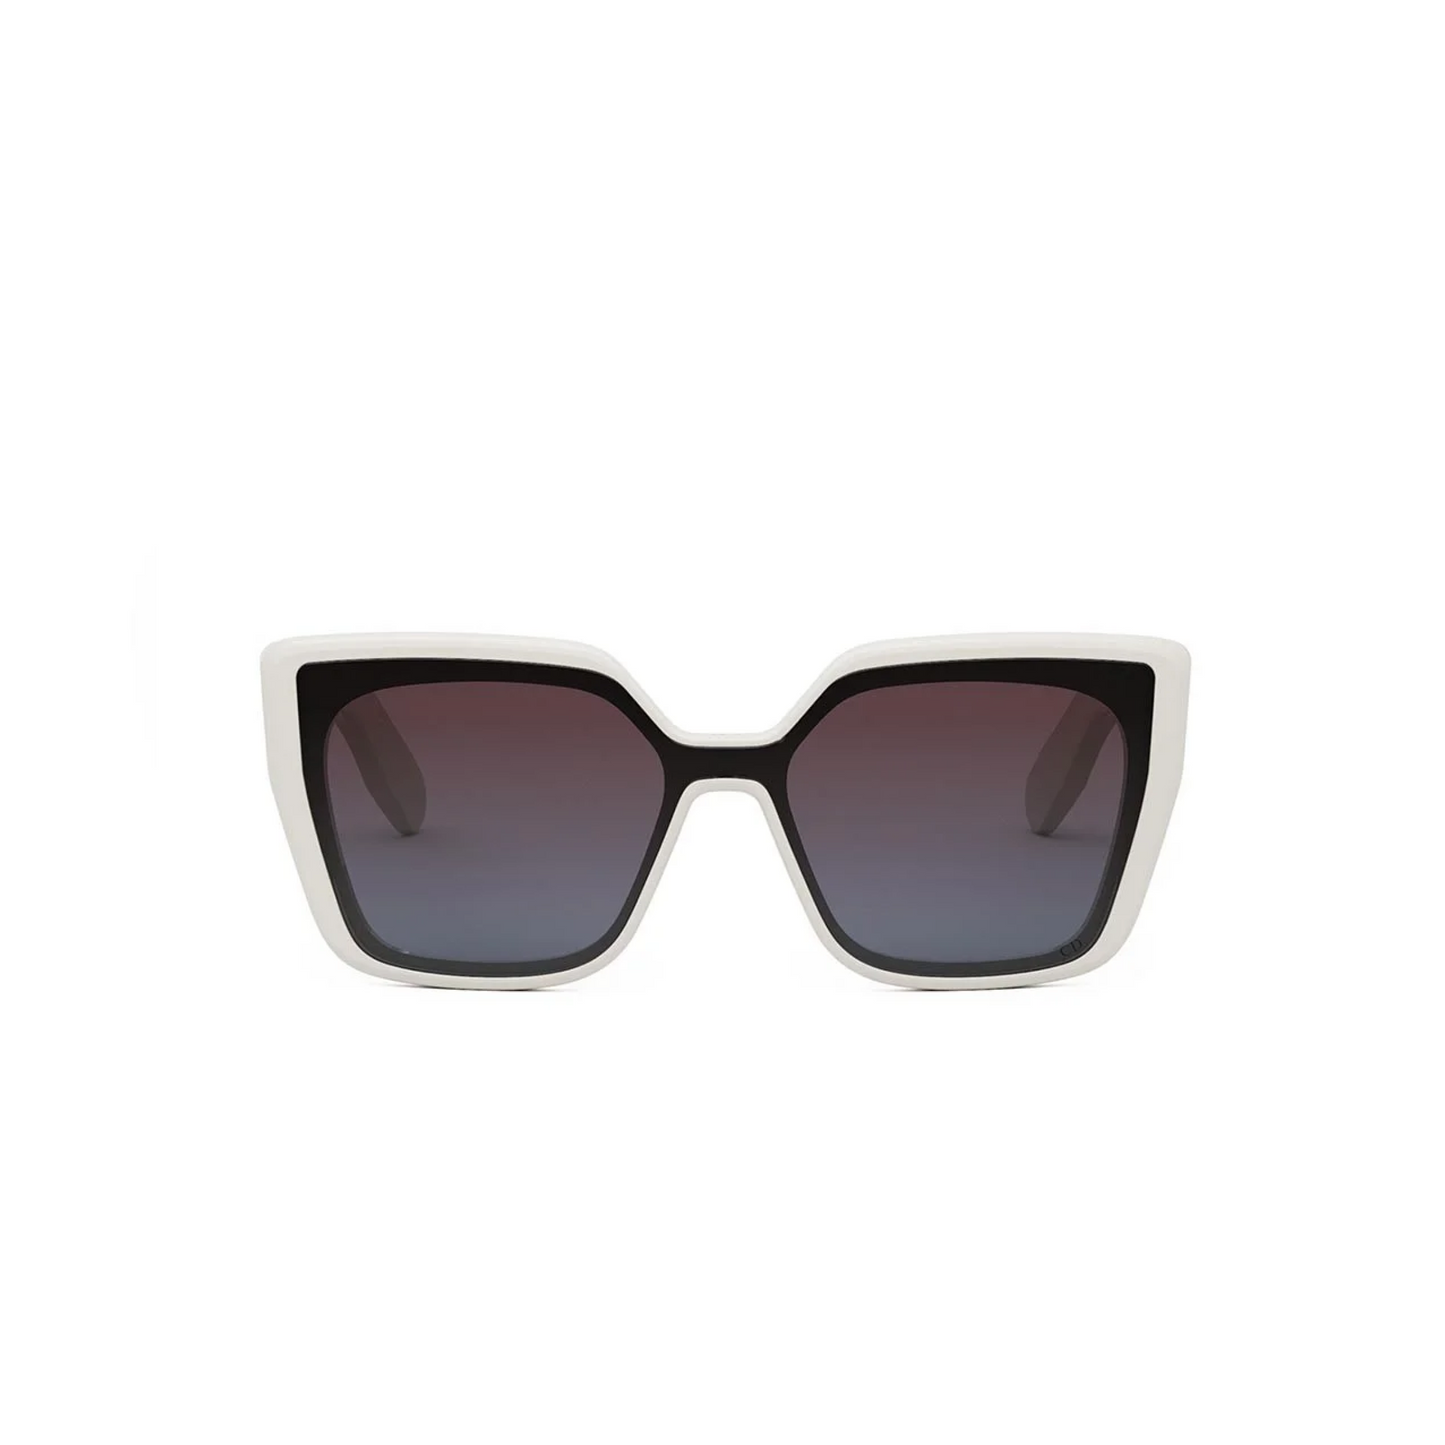 DiorLady 95.22 S2F 95A100 Sunglasses in White